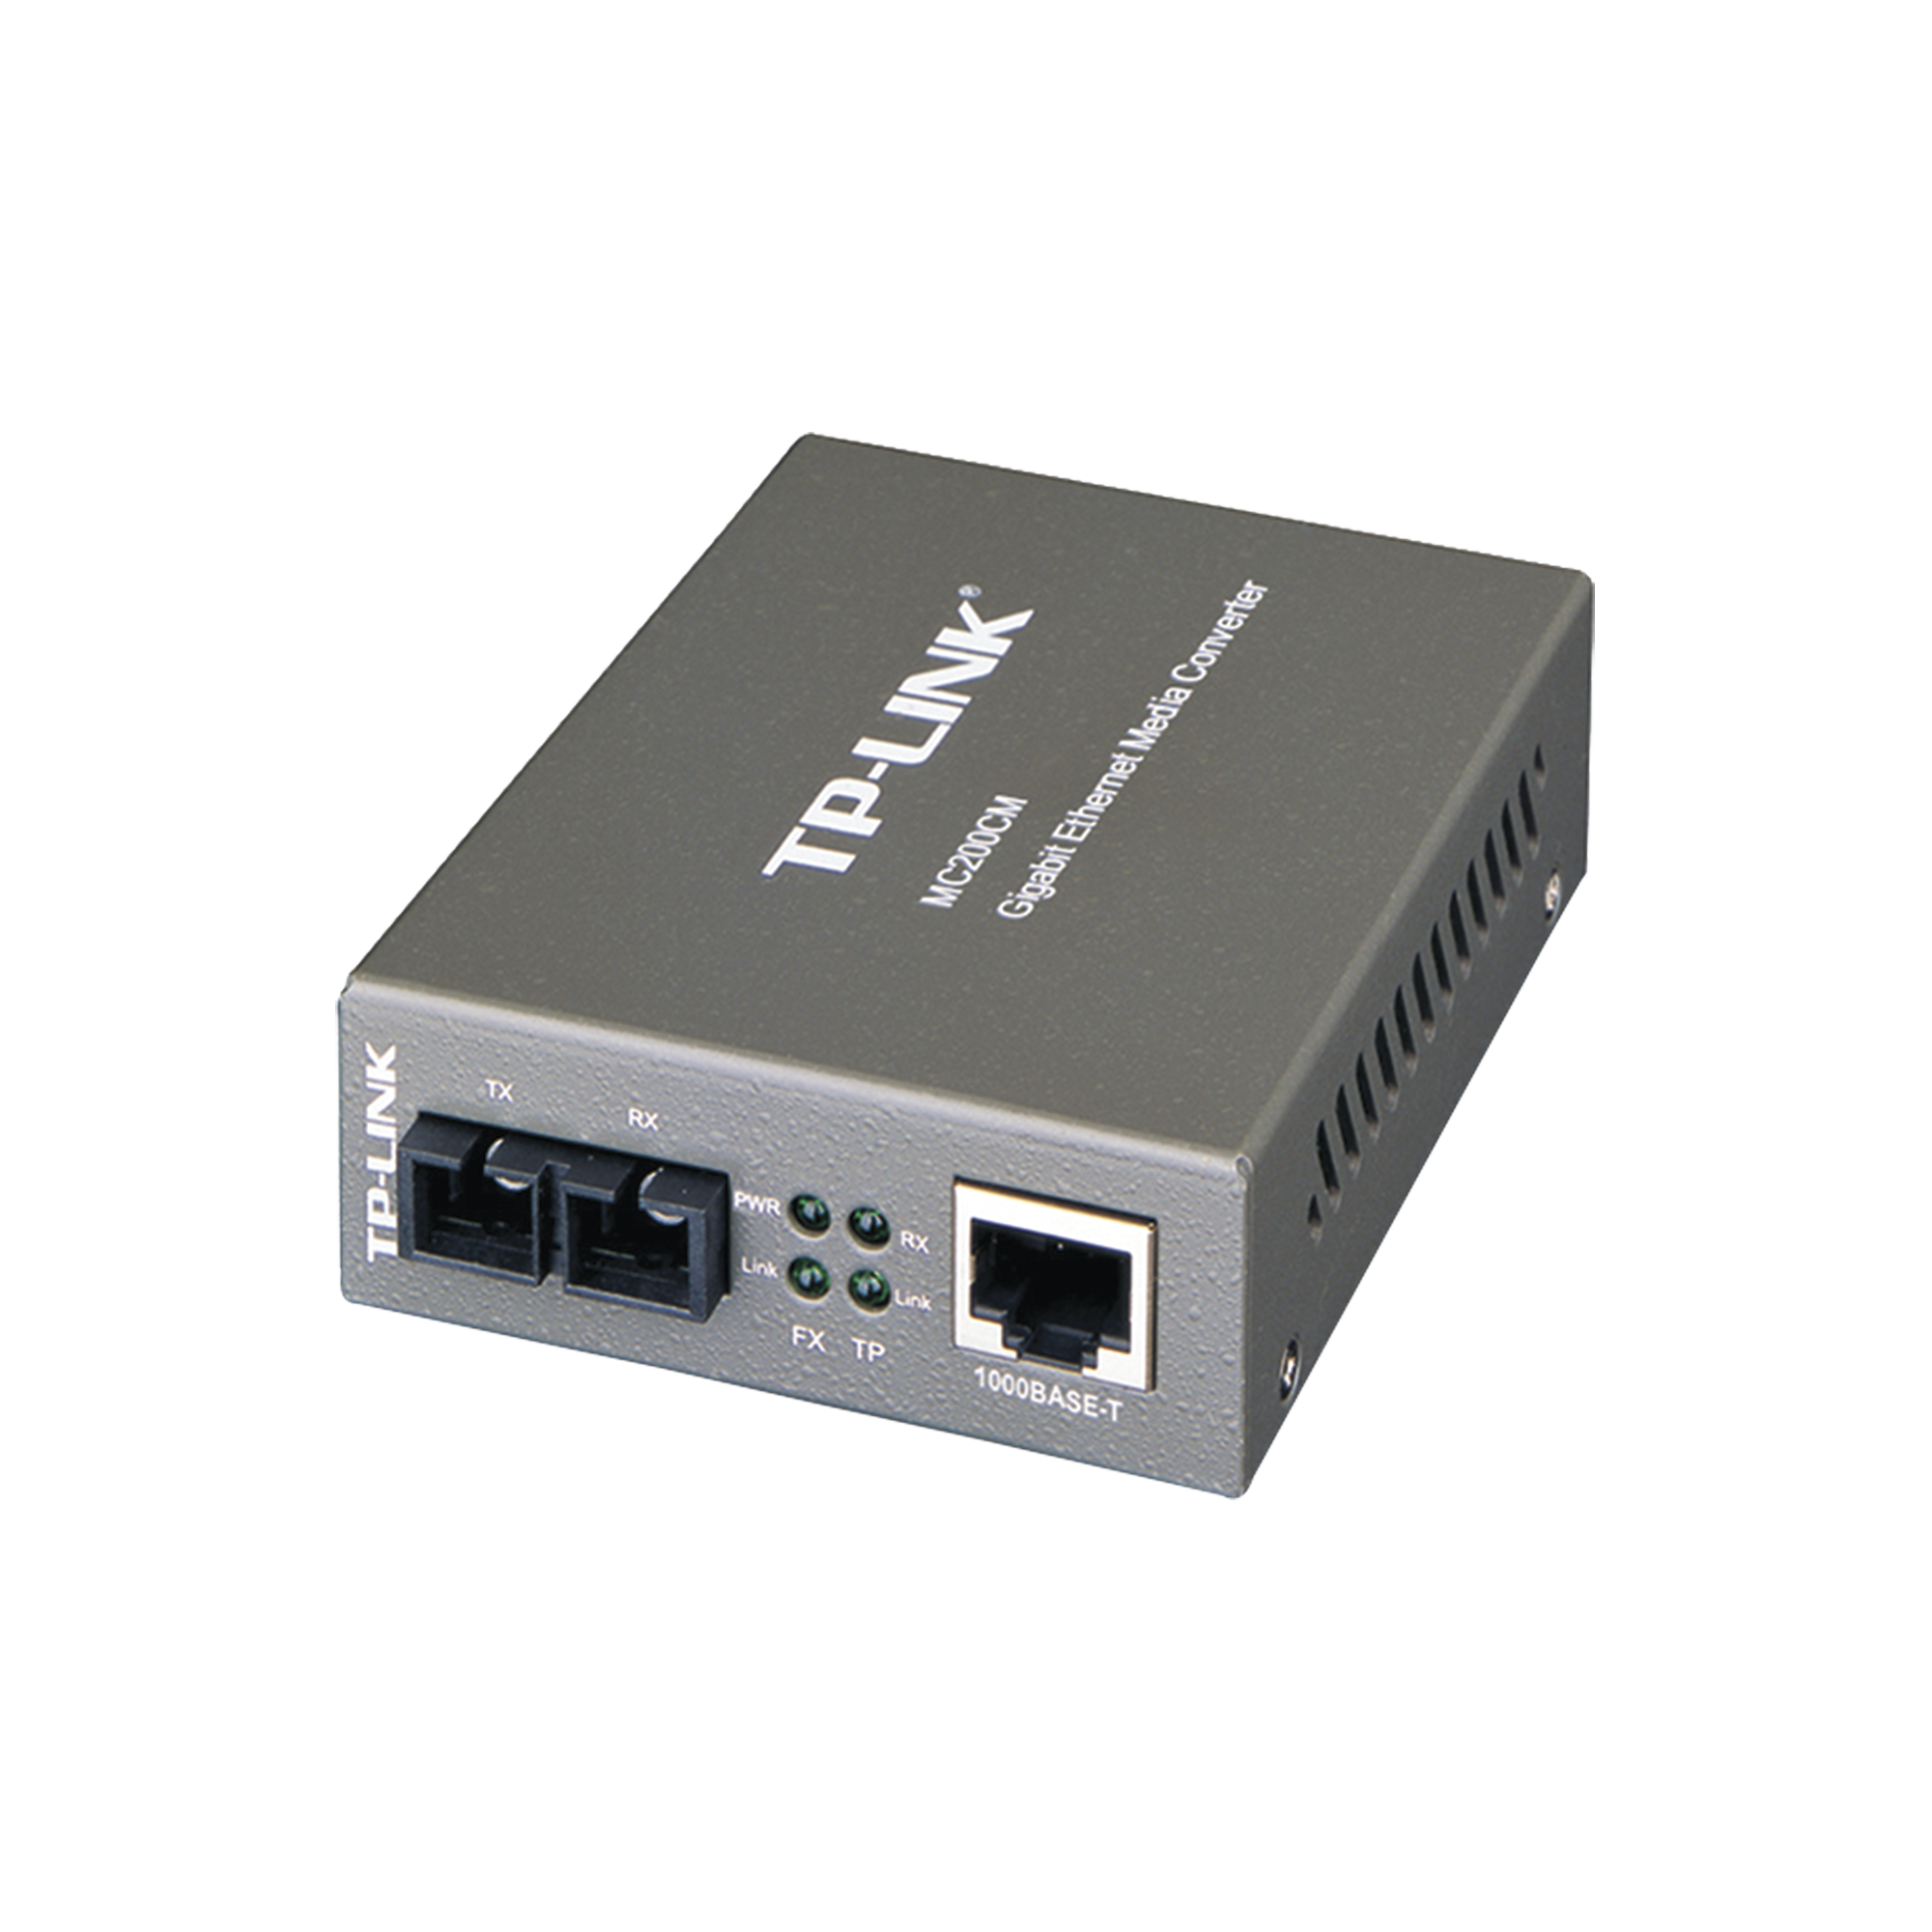 MC200CM: MC200CM: Convertidor Multimedia Multi-modo, 1 puerto RJ45 1000 Mbps, conector de fibra SC, hasta 500 M